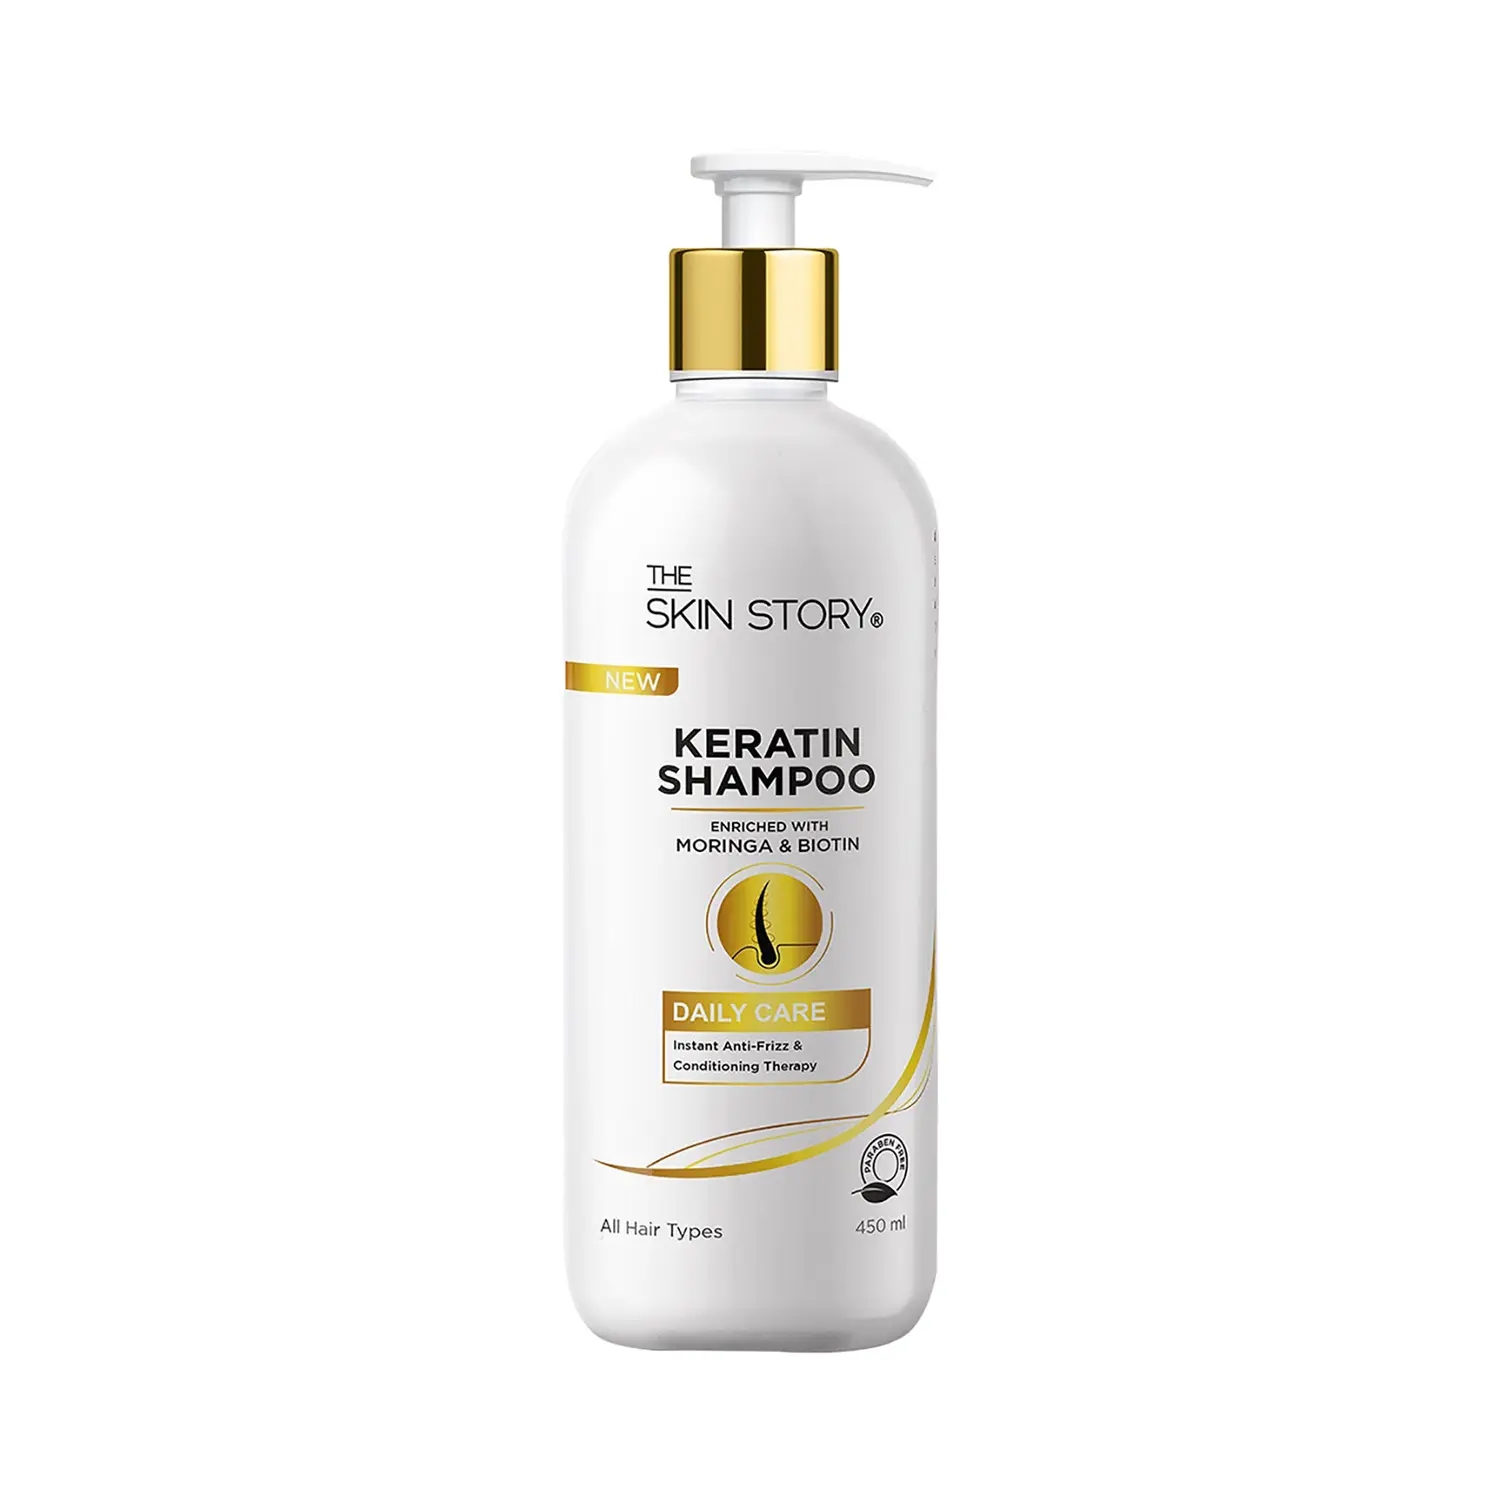 The Skin Story | The Skin Story New Moringa & Biotin Keratin Shampoo (450ml)